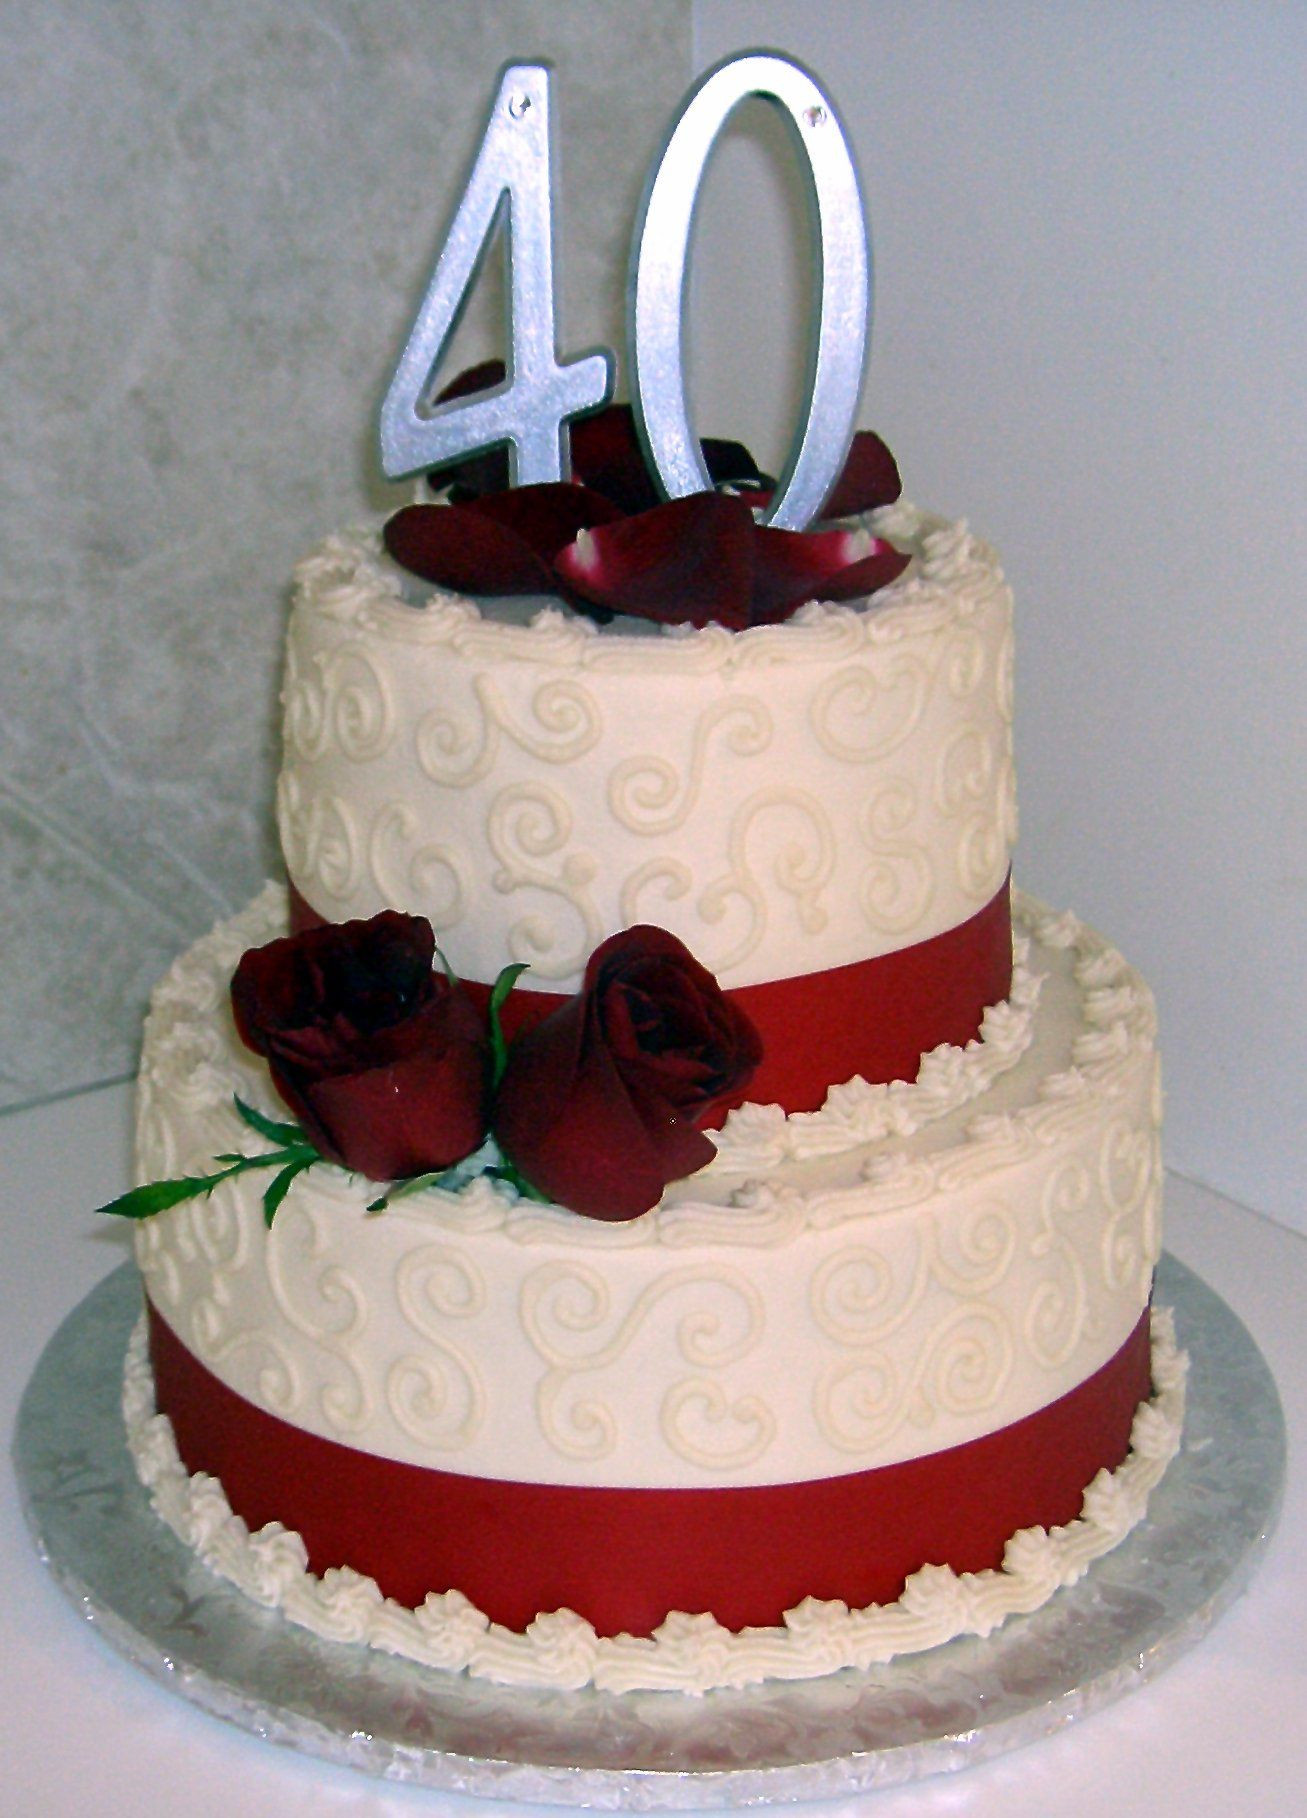 40th Wedding Anniversary Cakes
 40th Wedding Anniversary Cakes